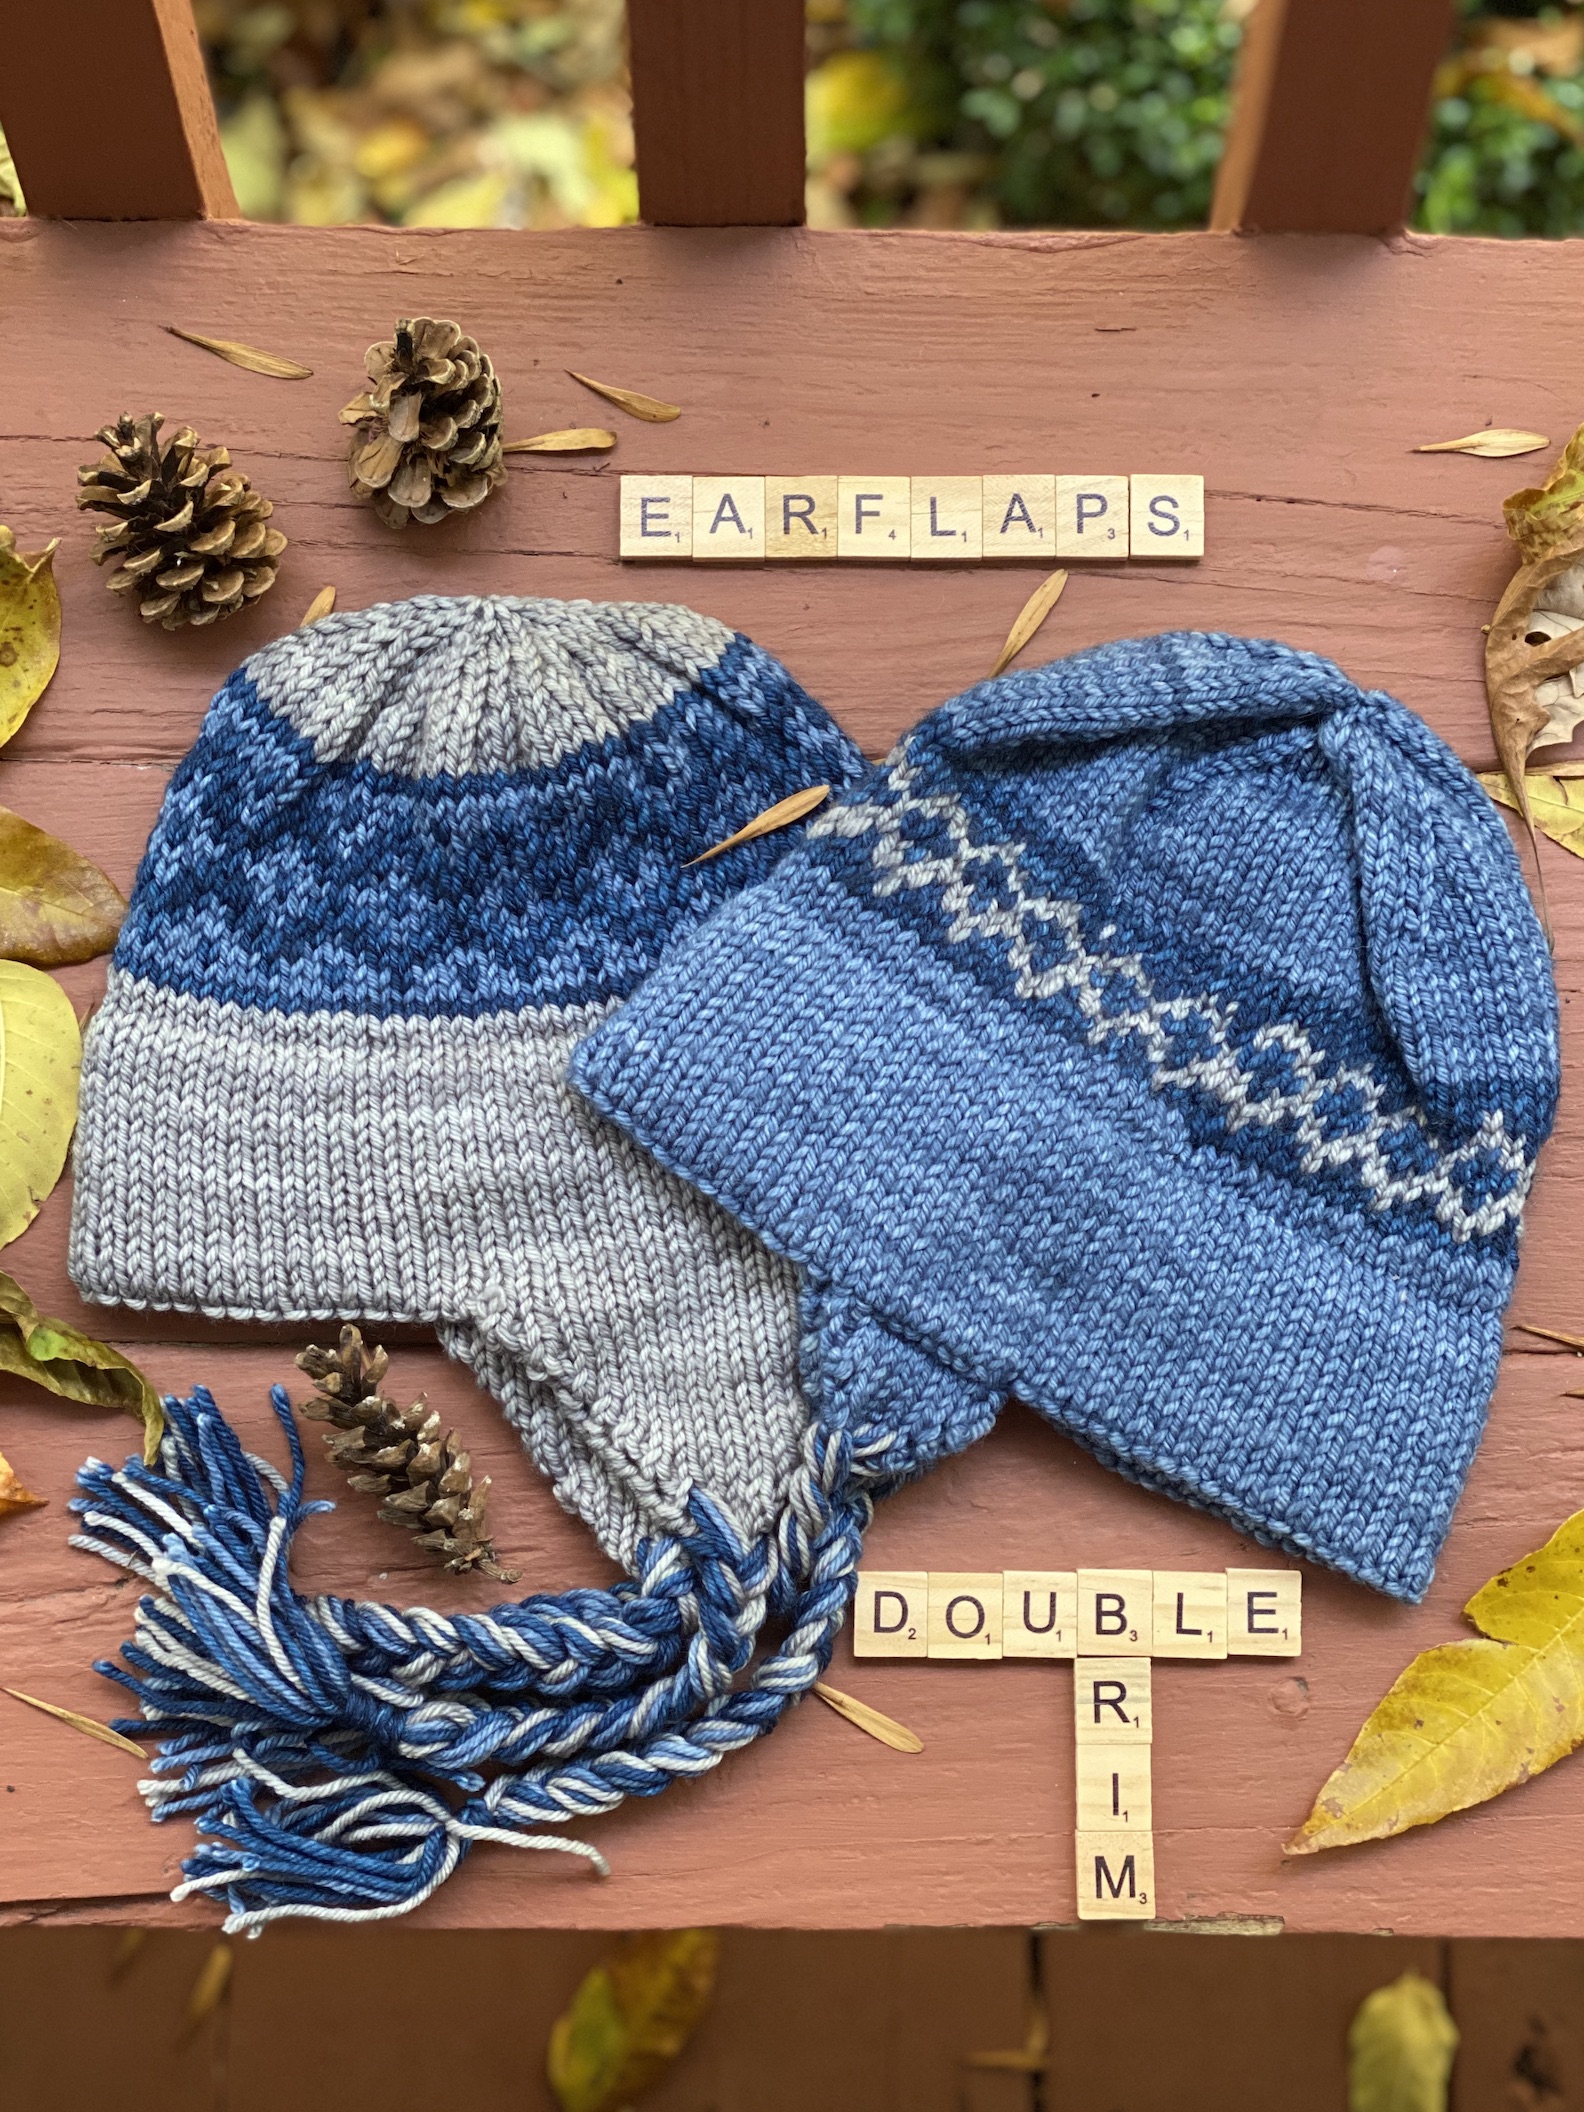 Knitting Pattern for a Double Brim Ear Flap Hat